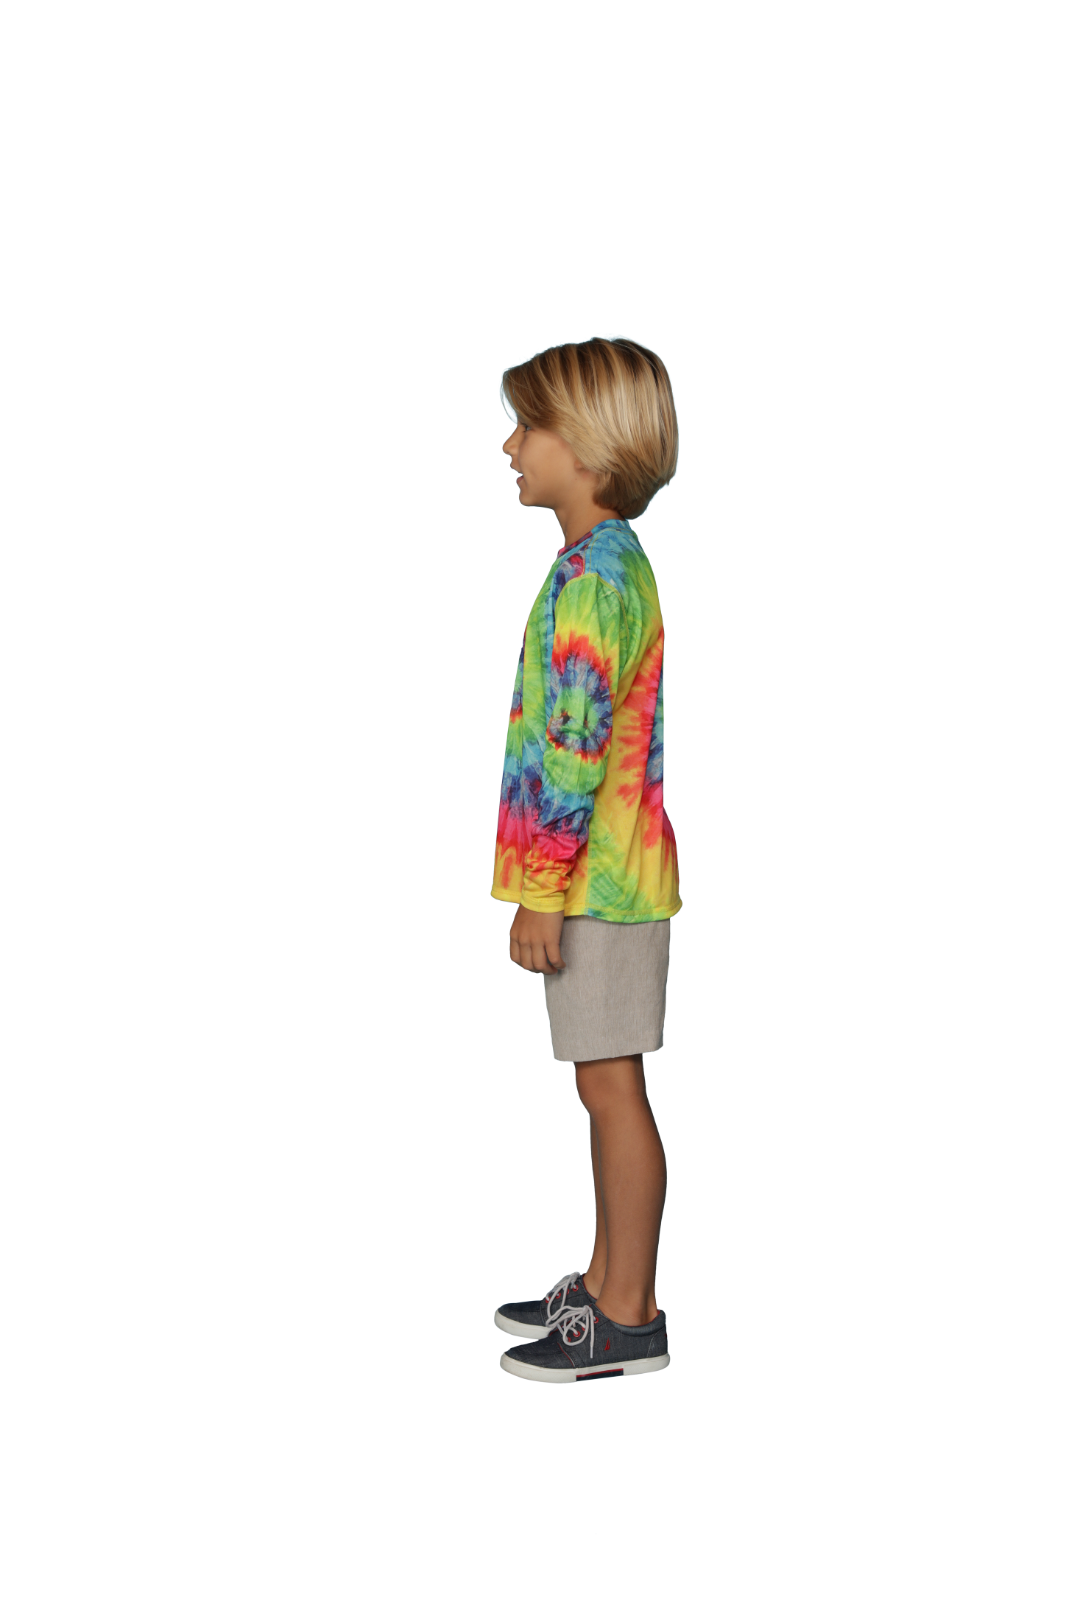 InGear Dry Fit swim shirts for Boys UV Sun Protective Rash Guard Workout Shirts - image 3 of 3